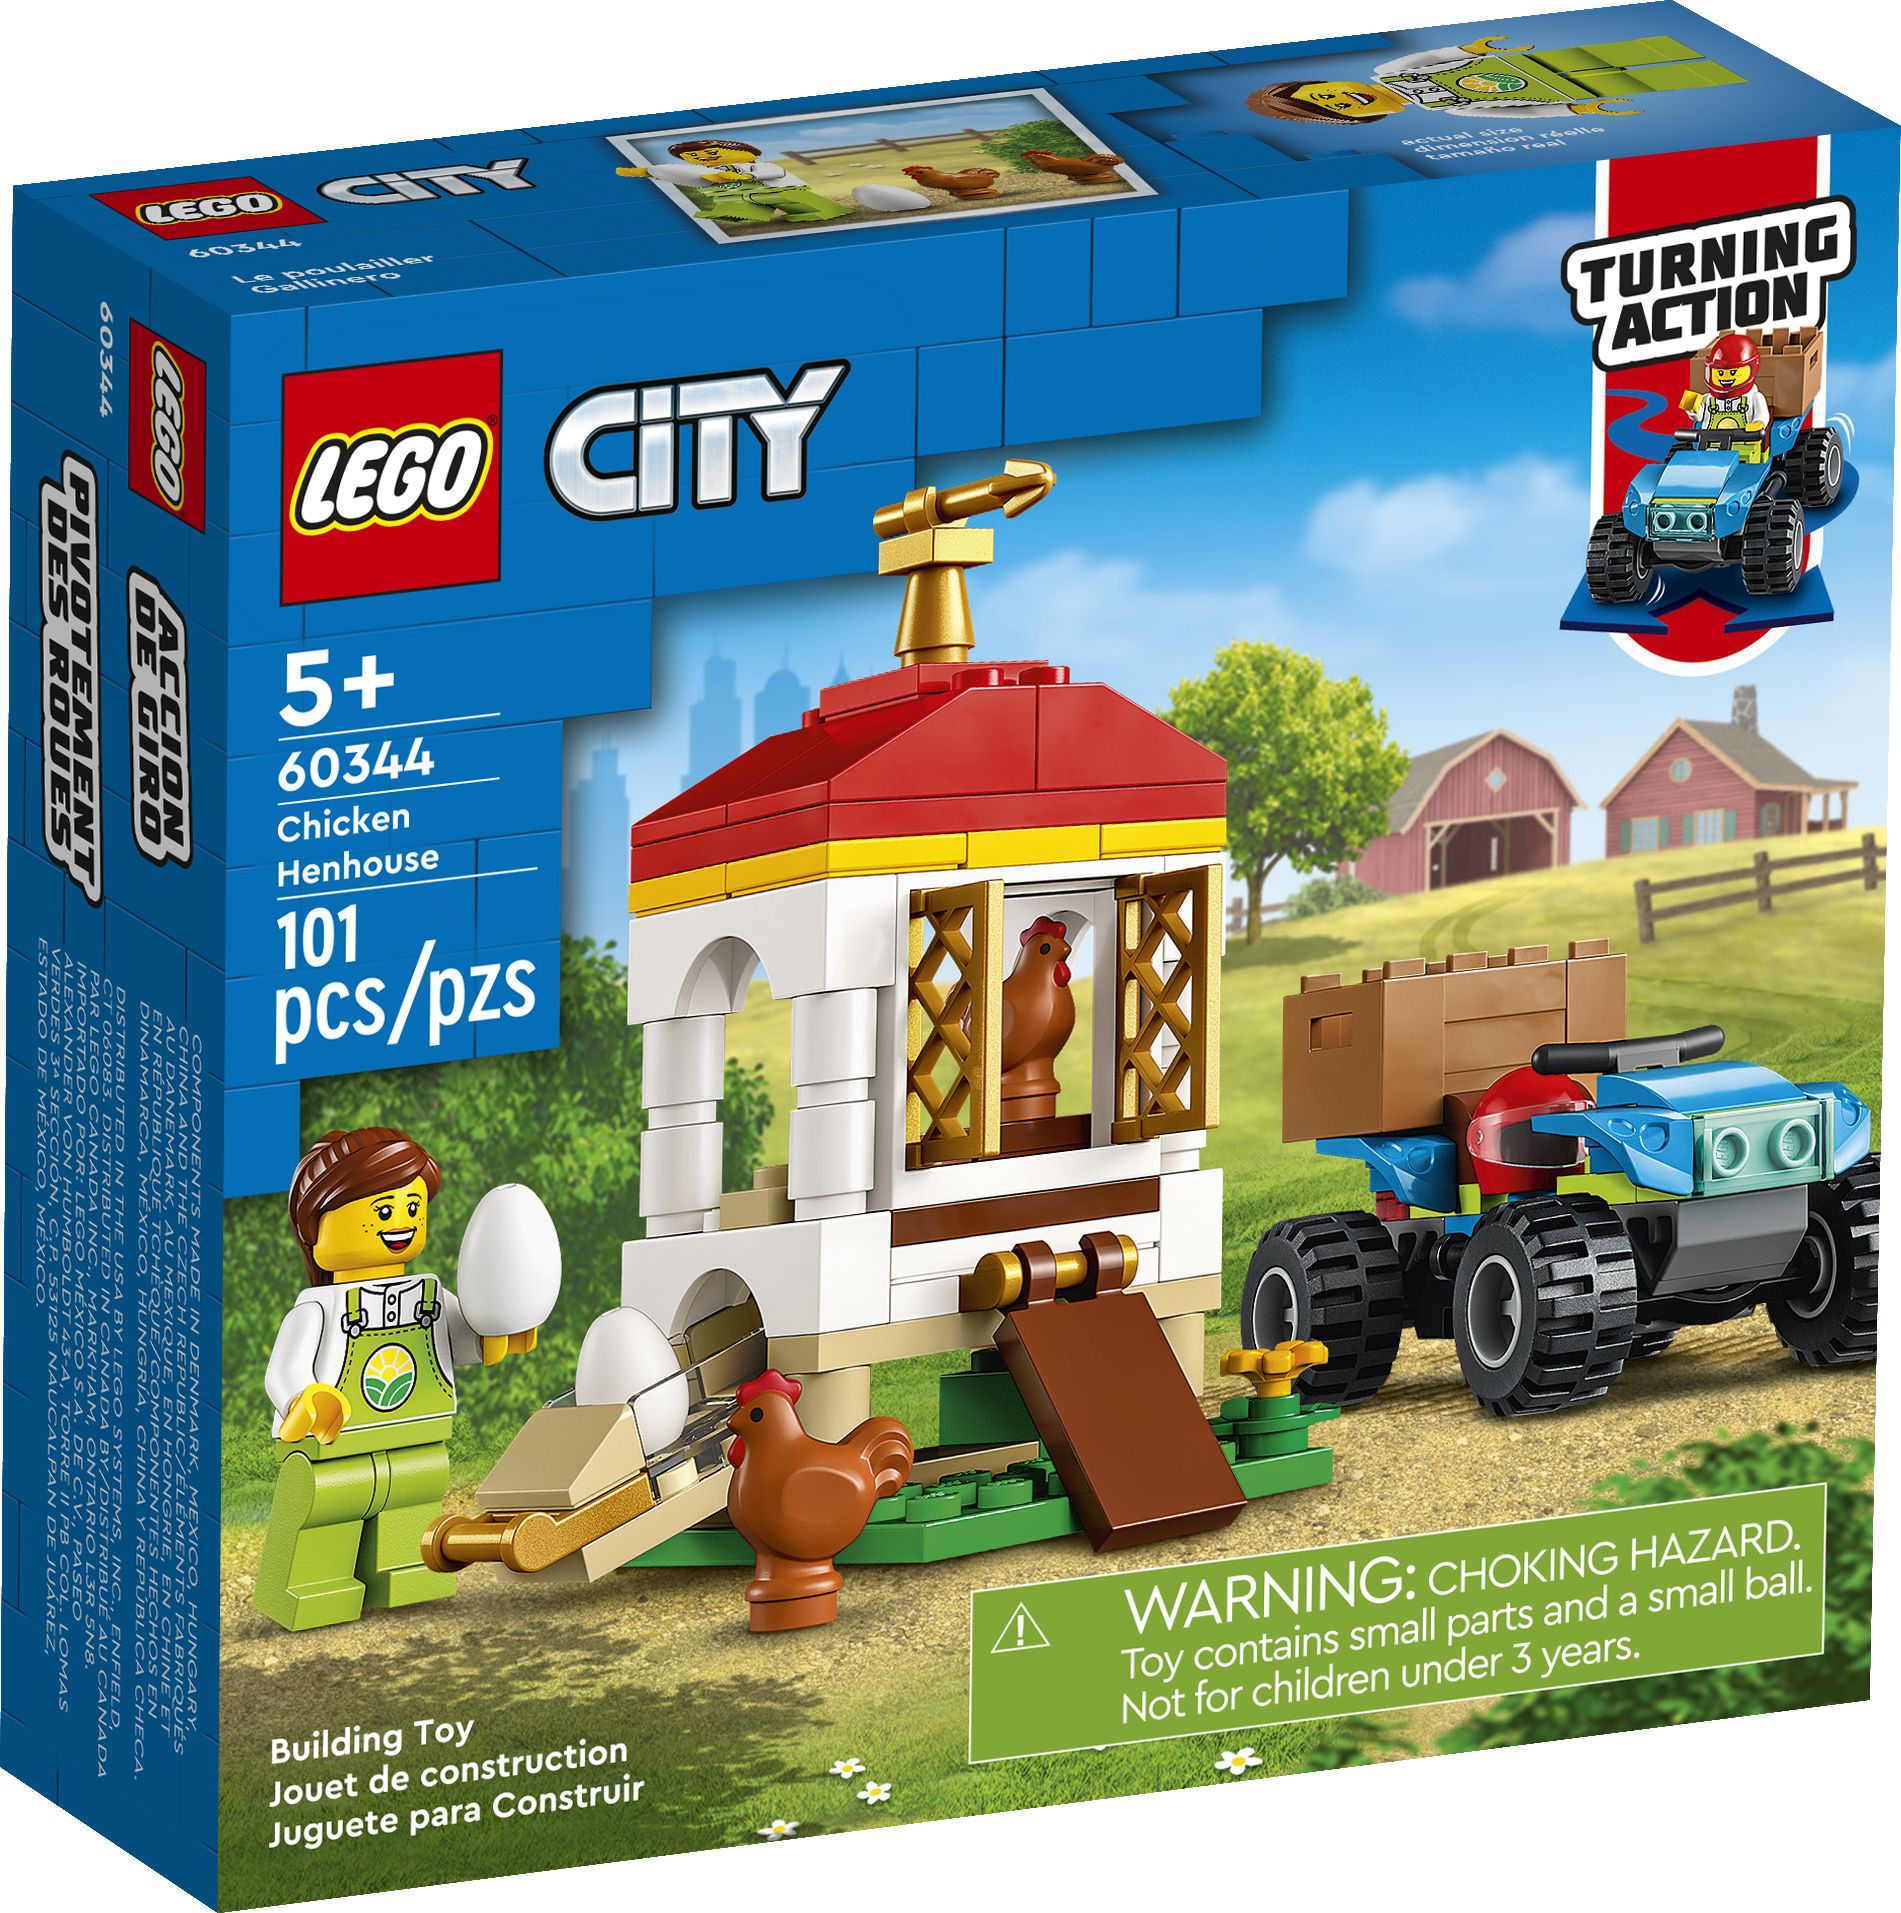 LEGO City 60344 Hühnerstall LEGO_60344_Box1_V39.jpg